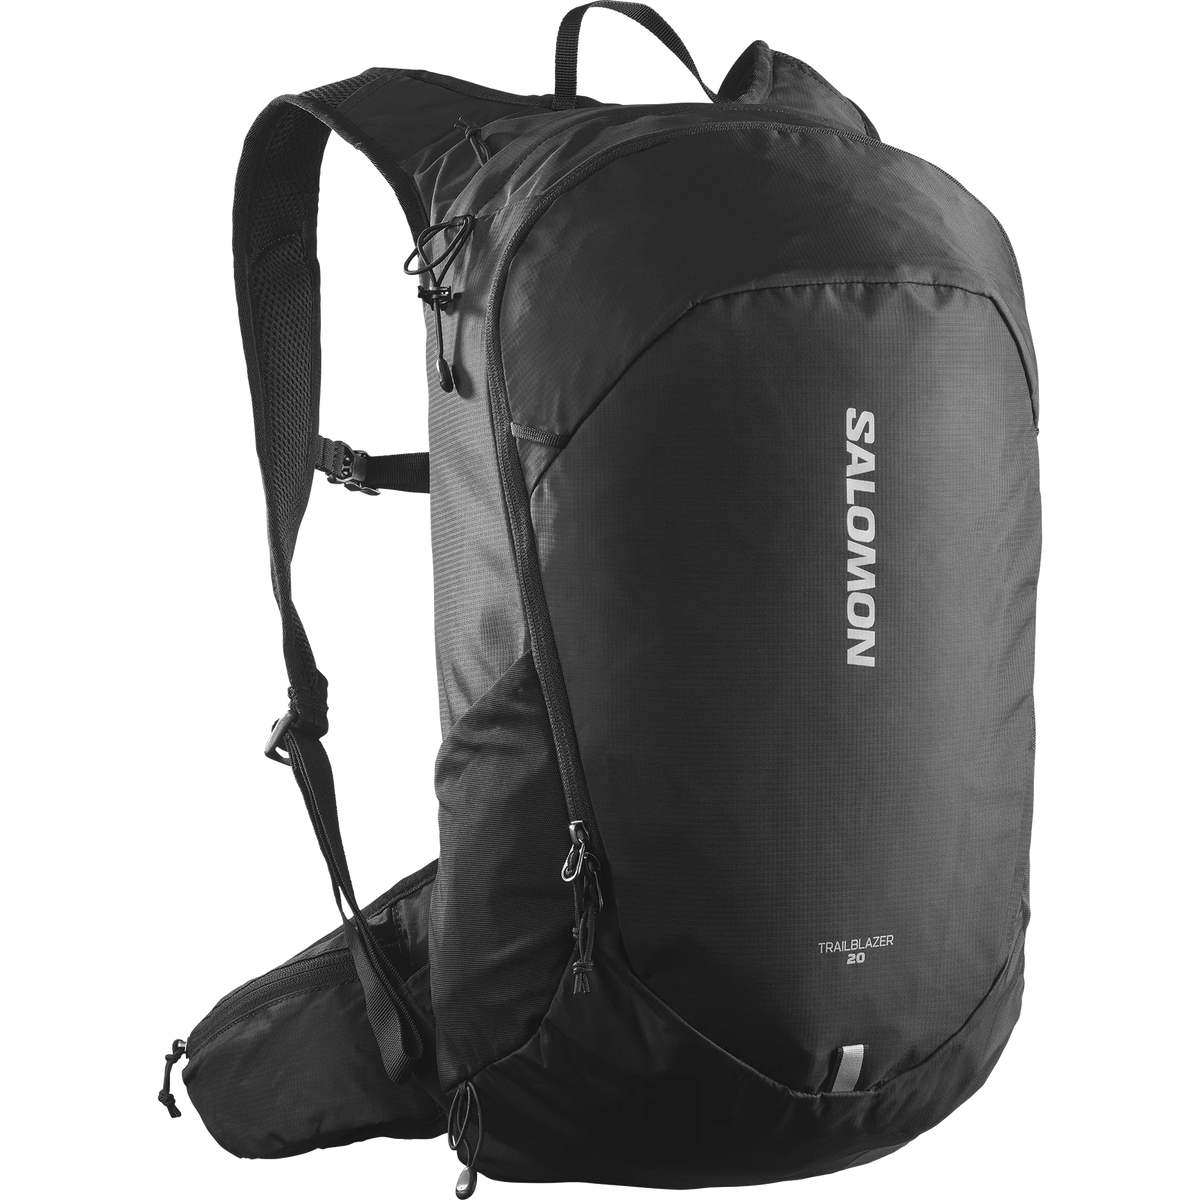 Salomon Trailblazer 20 Backpack (Unisex) - Black/Alloy - Find Your Feet Australia Hobart Launceston Tasmania